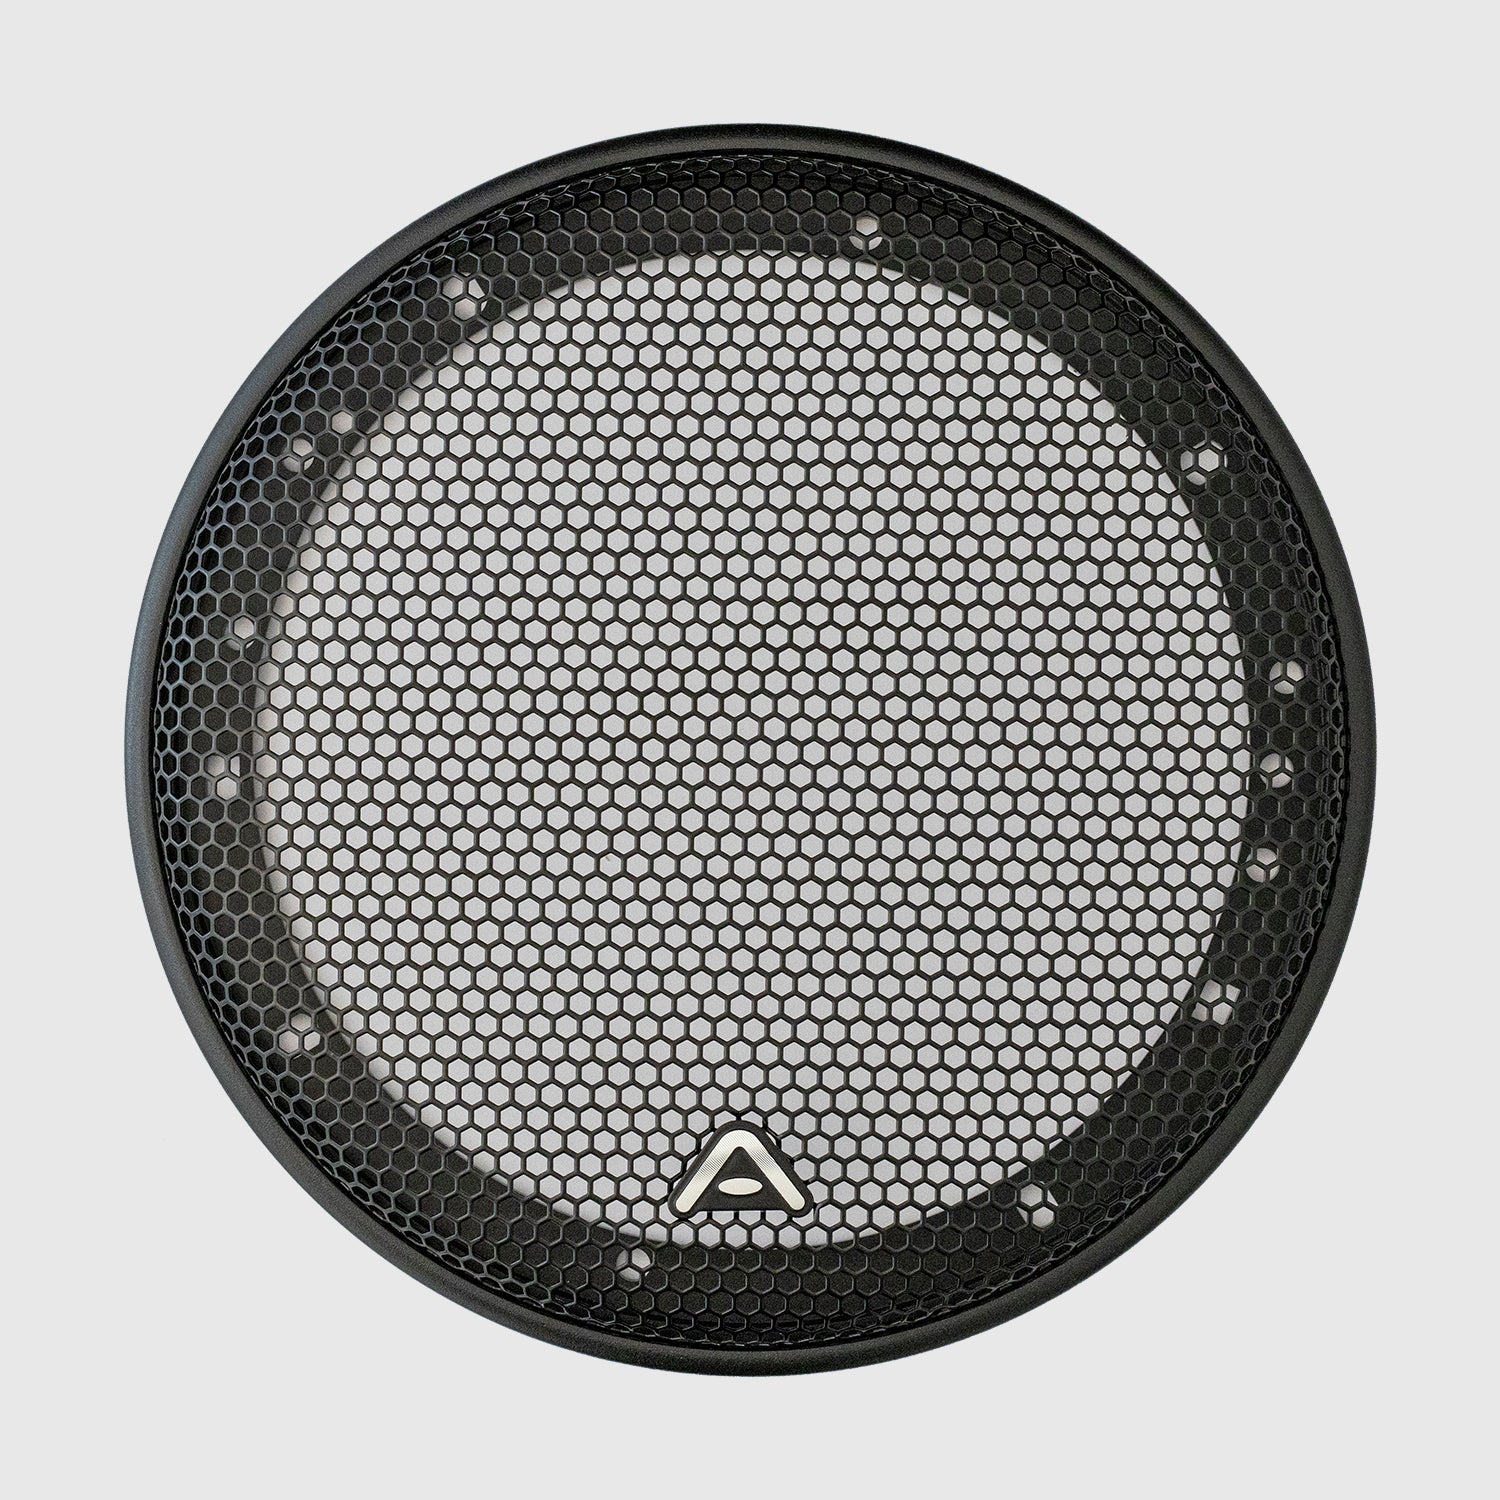 AI-SONIC S2 Speaker grills 6.5″ S2-SPG165